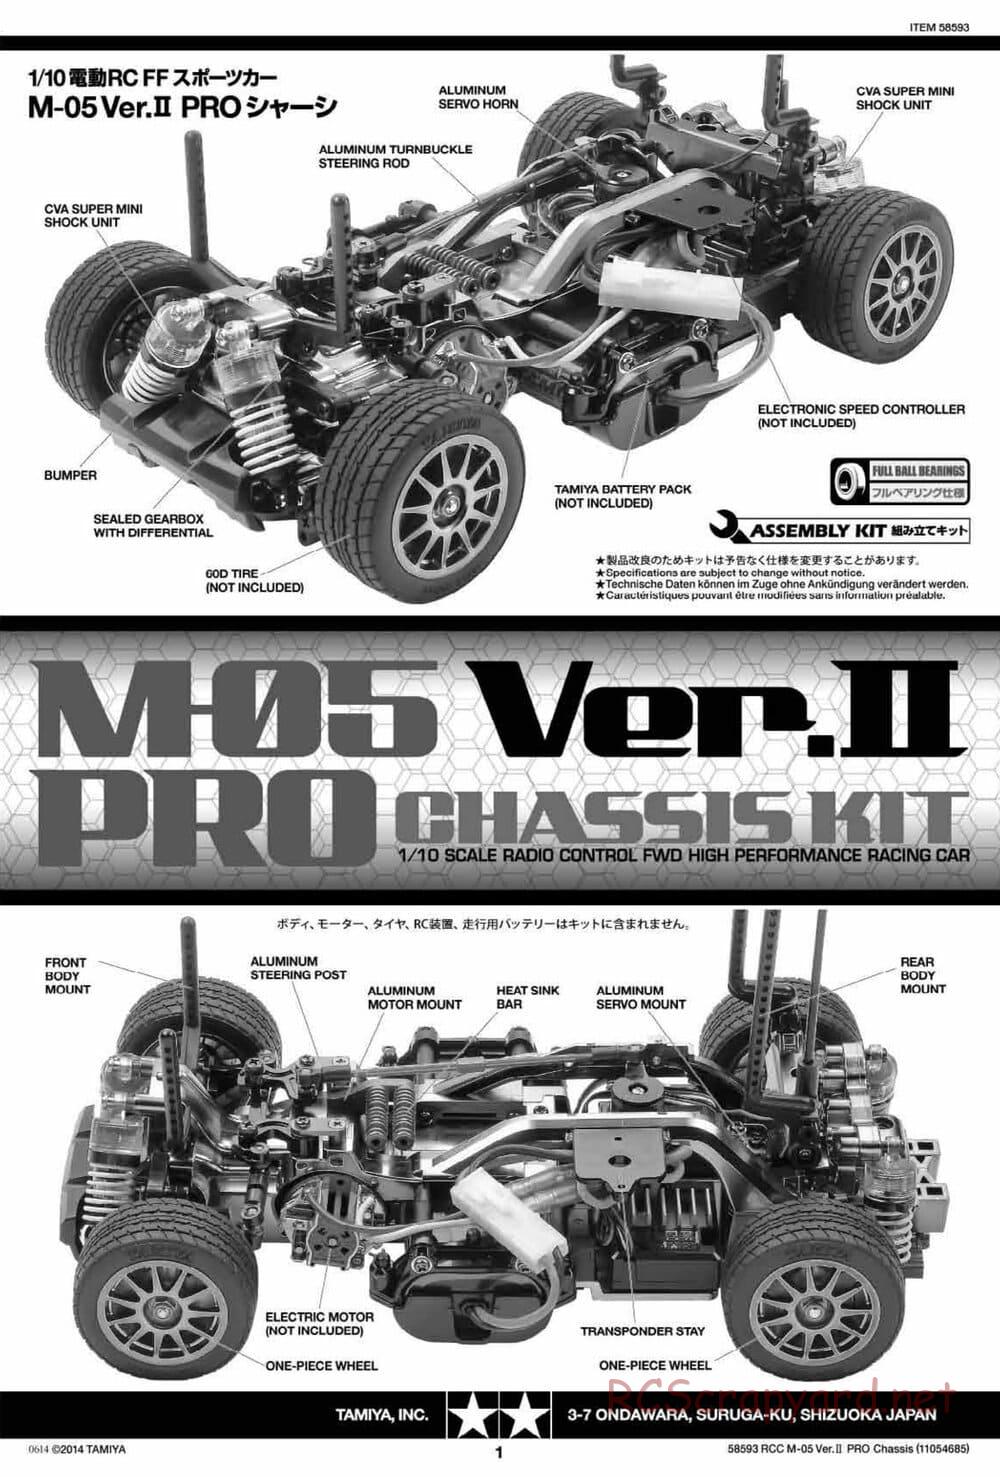 Tamiya - M-05 Ver.II Pro Chassis - Manual - Page 1